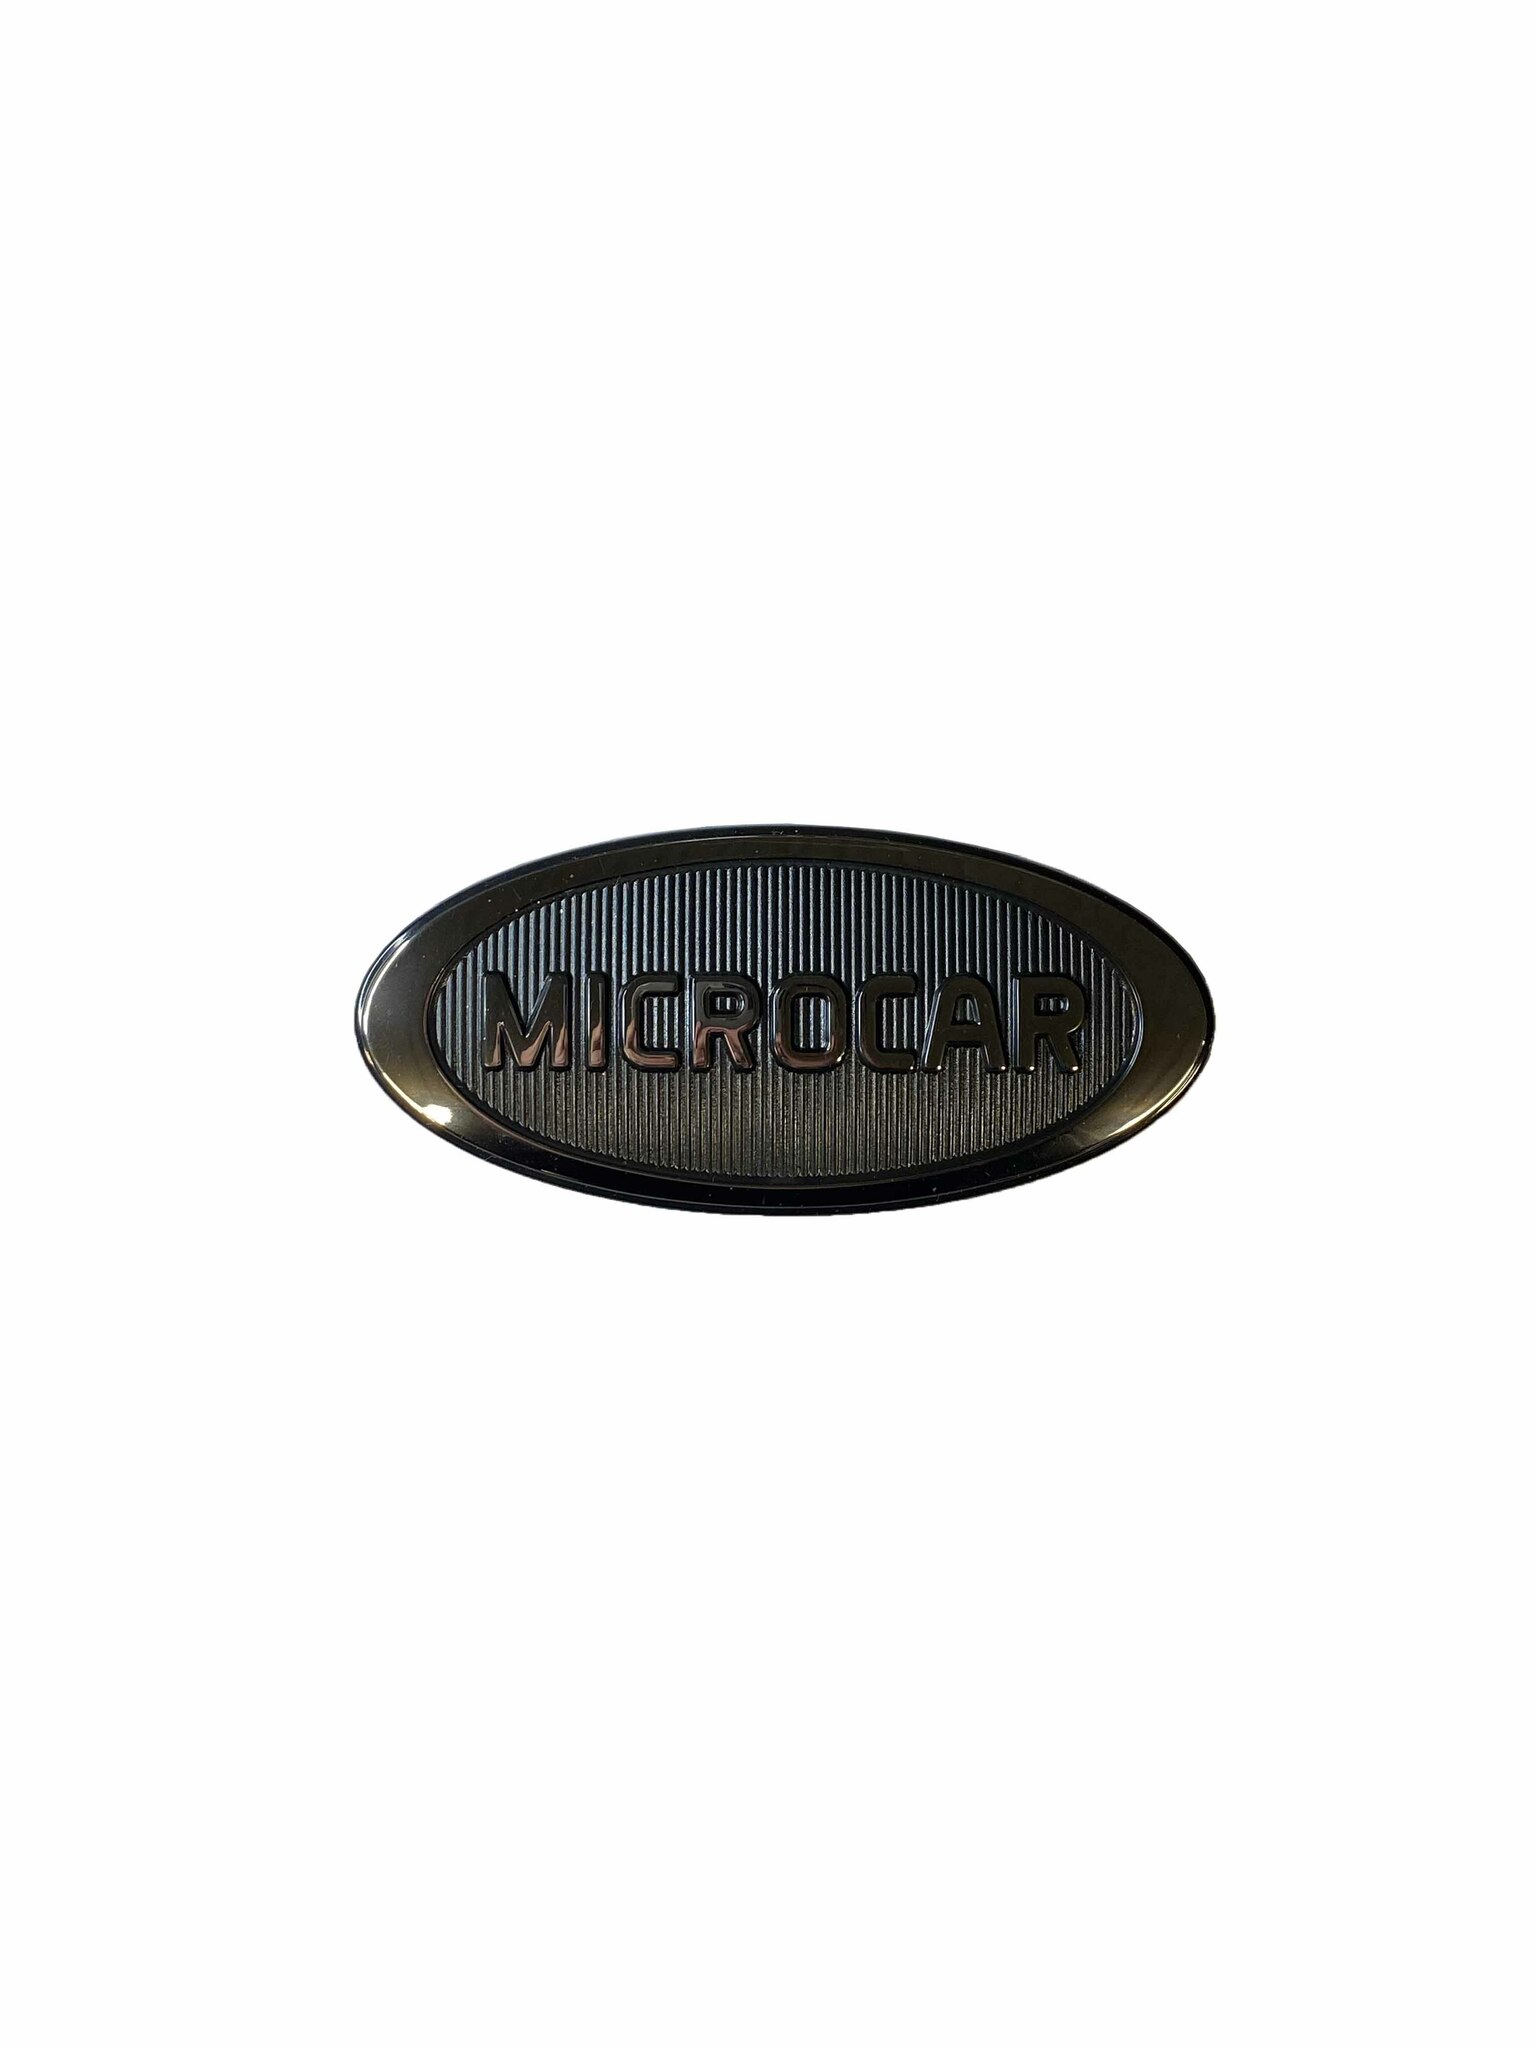 Emblem motorhuv Microcar (original)